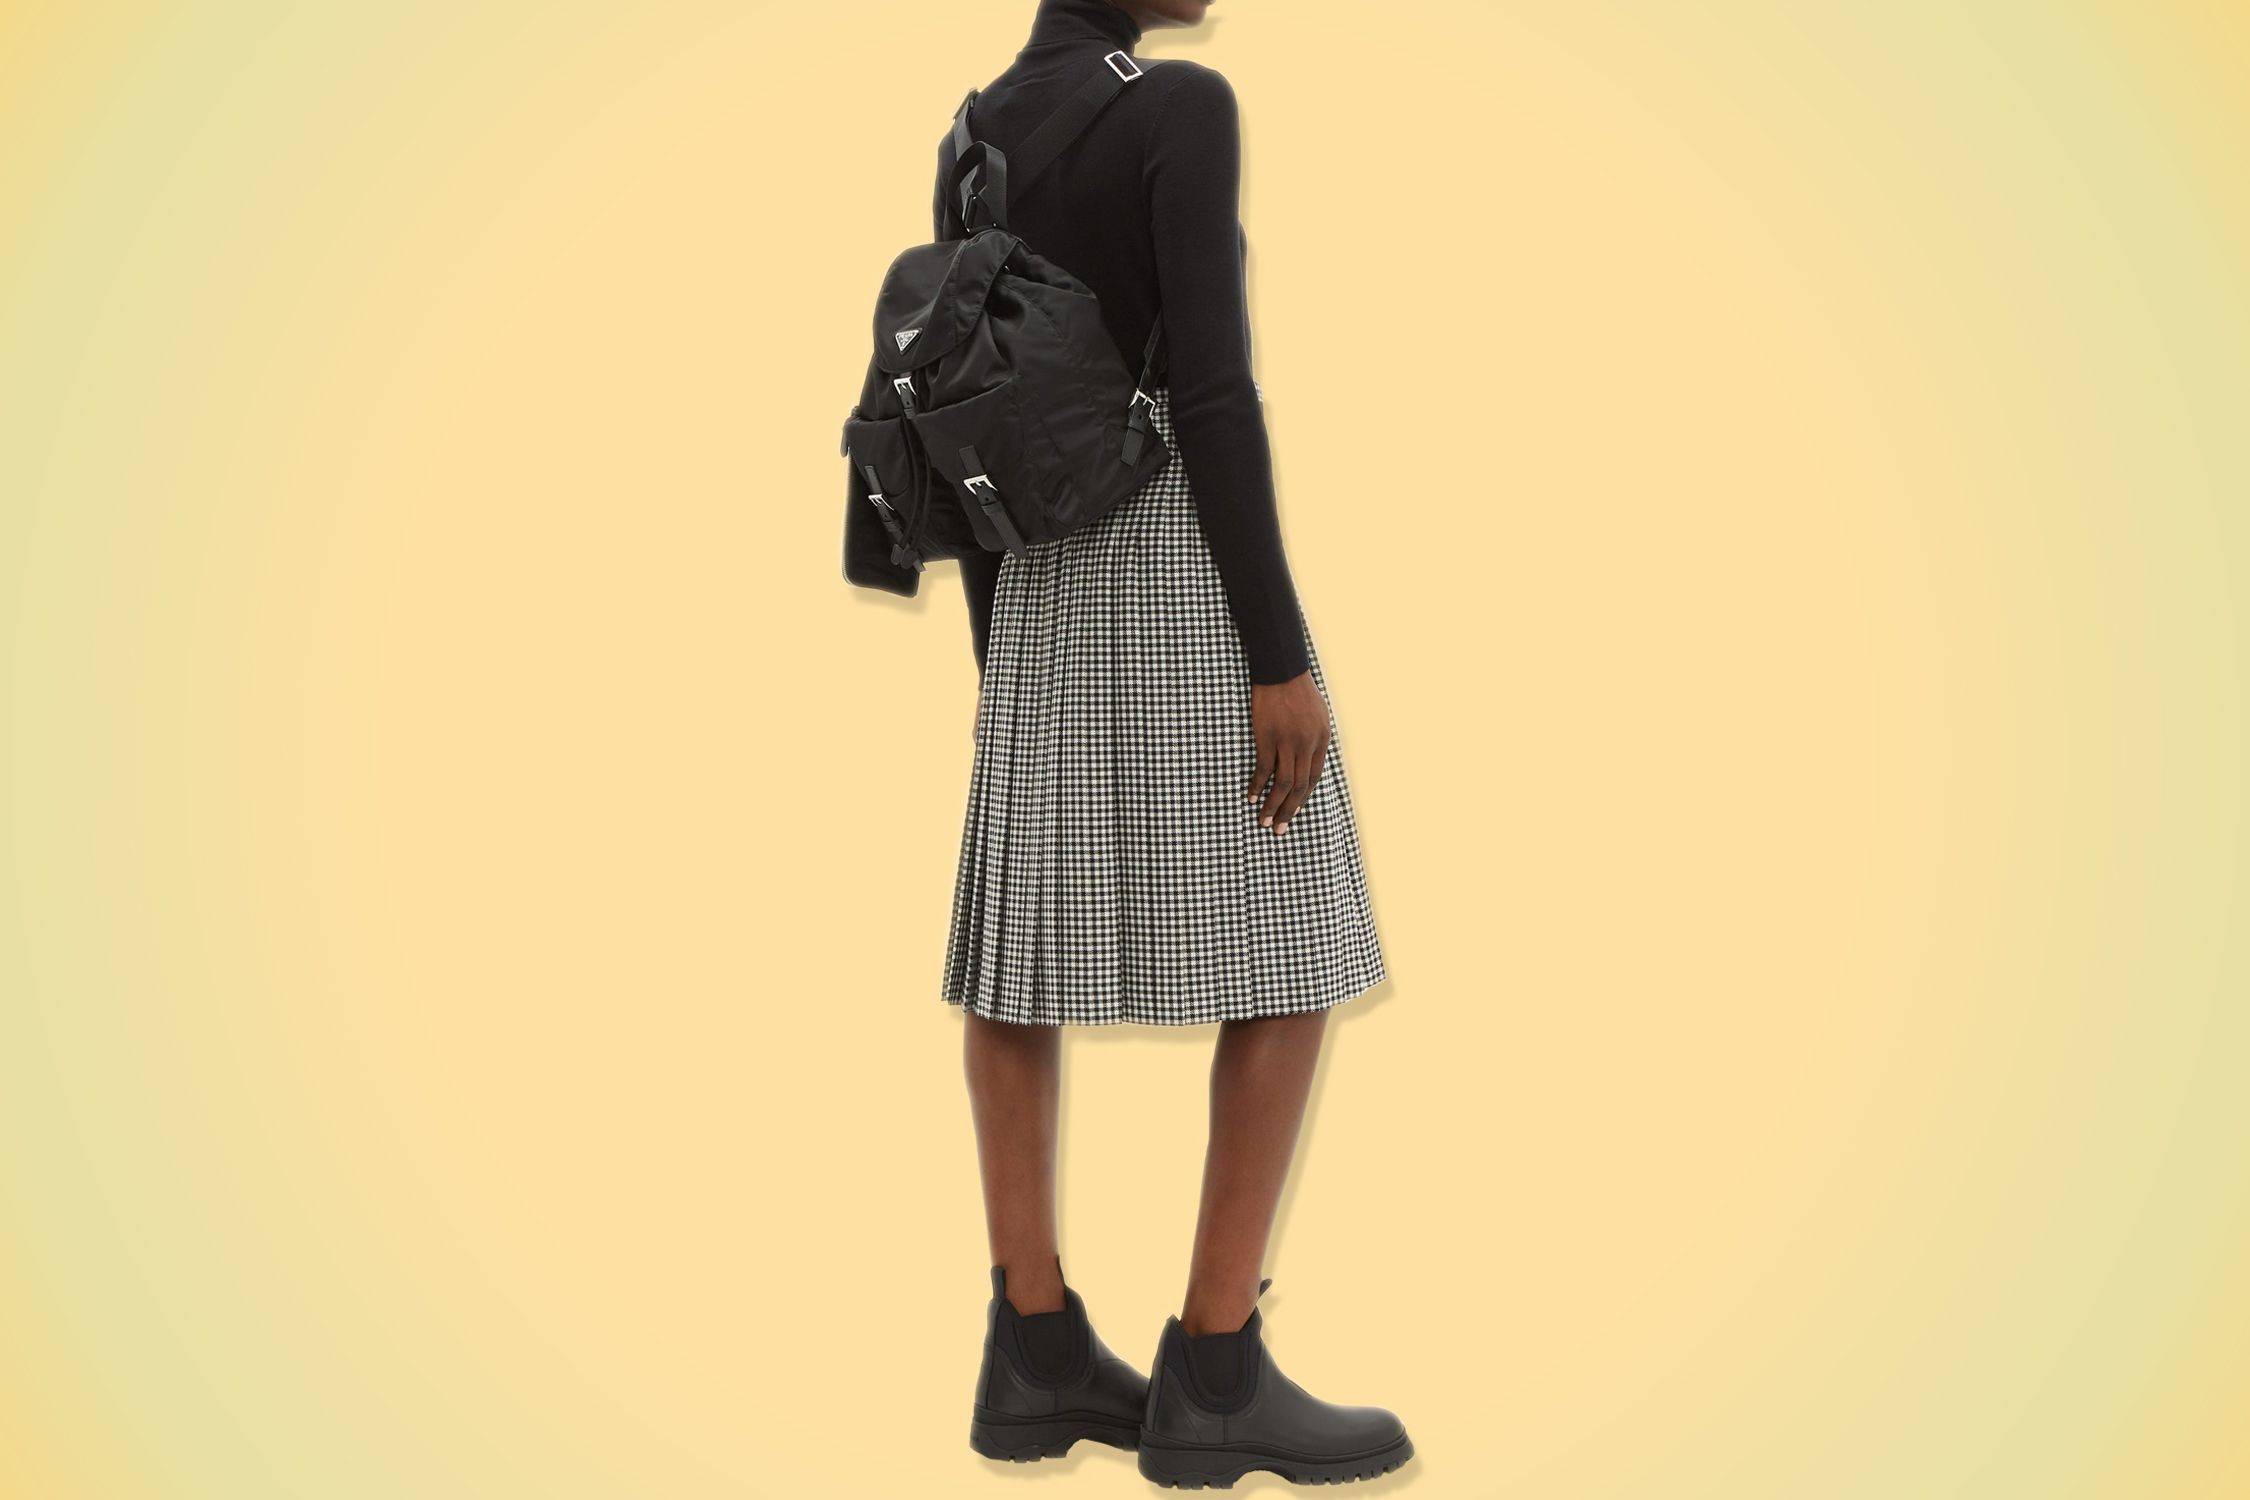 Prada Nylon Backpack Review | The